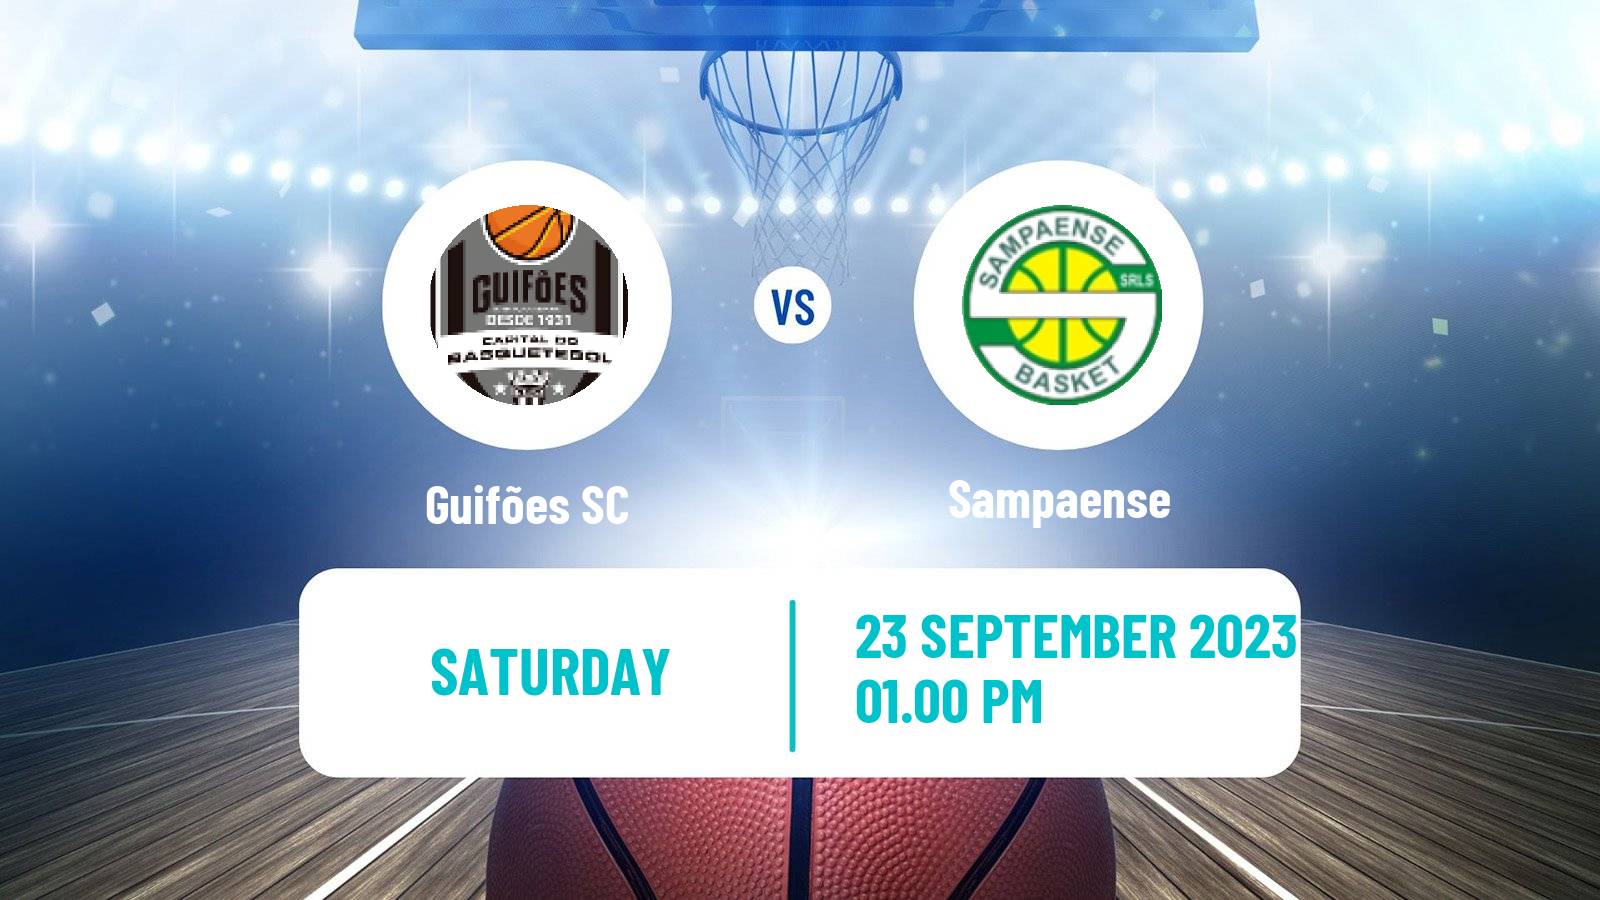 Basketball Club Friendly Basketball Guifões - Sampaense